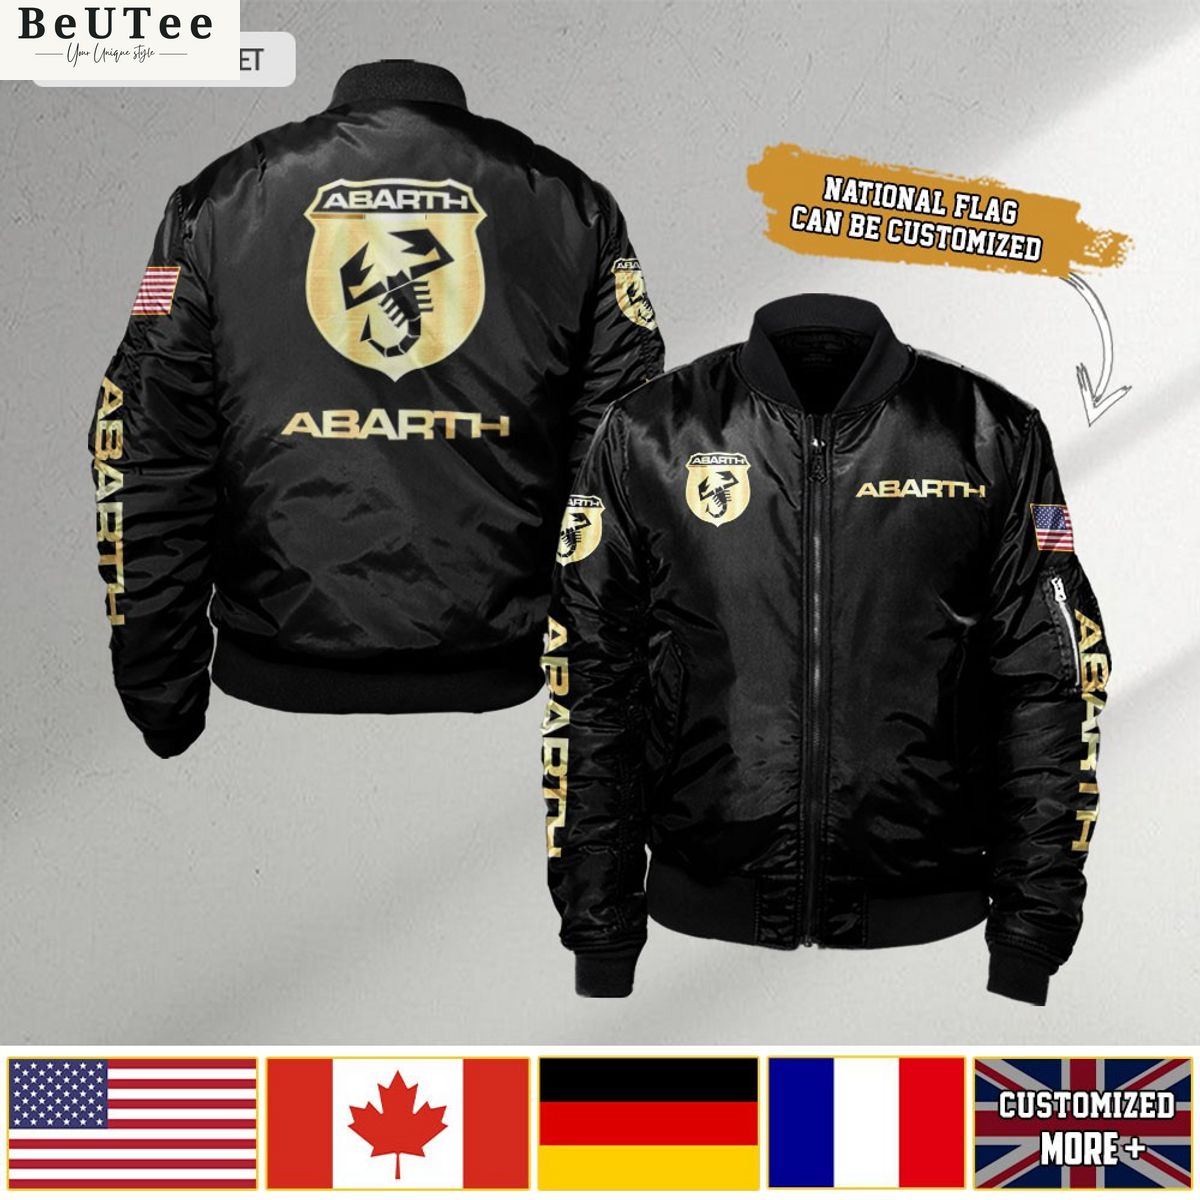 abarth custom flag 3d bomber jacket 1 cTDUA.jpg